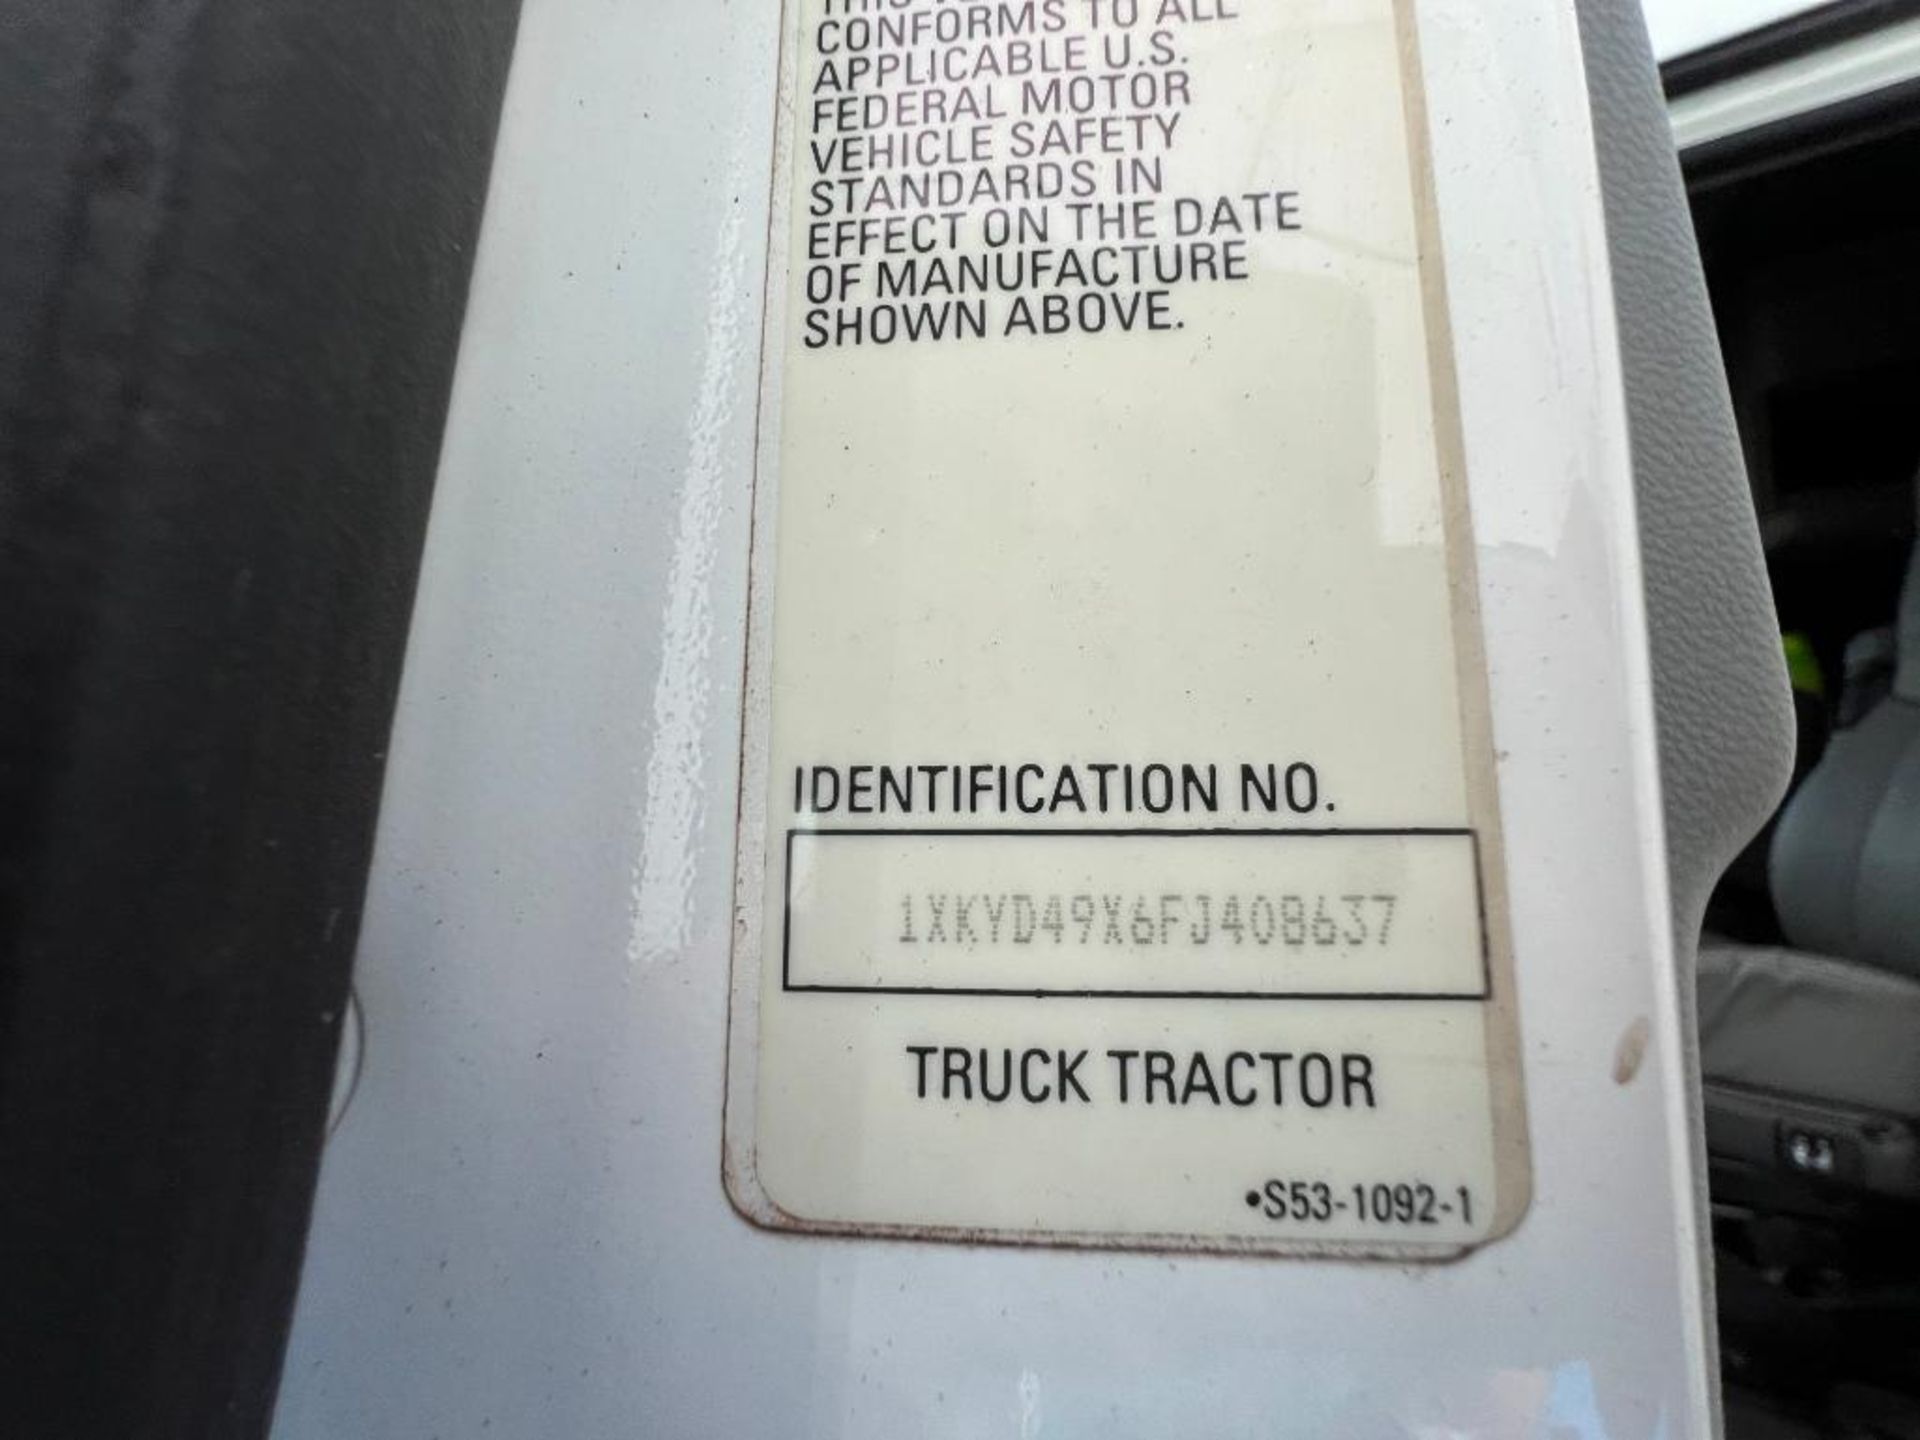 2015 Kenworth T680 Tandem Axle Tractor VIN: 1XKYD49X6FJ408637 - Image 25 of 27